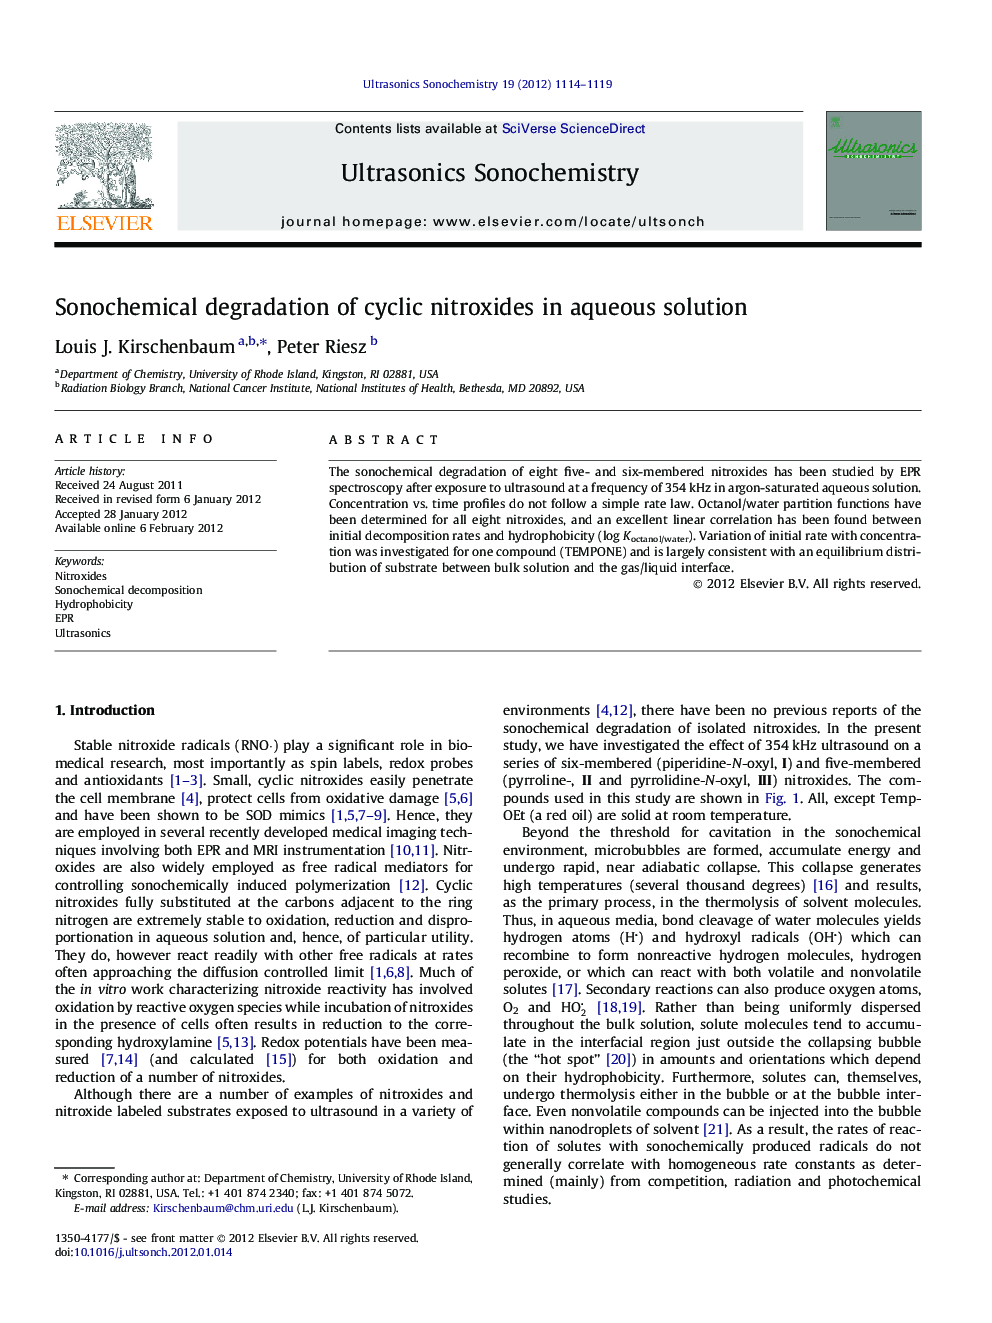 Sonochemical degradation of cyclic nitroxides in aqueous solution